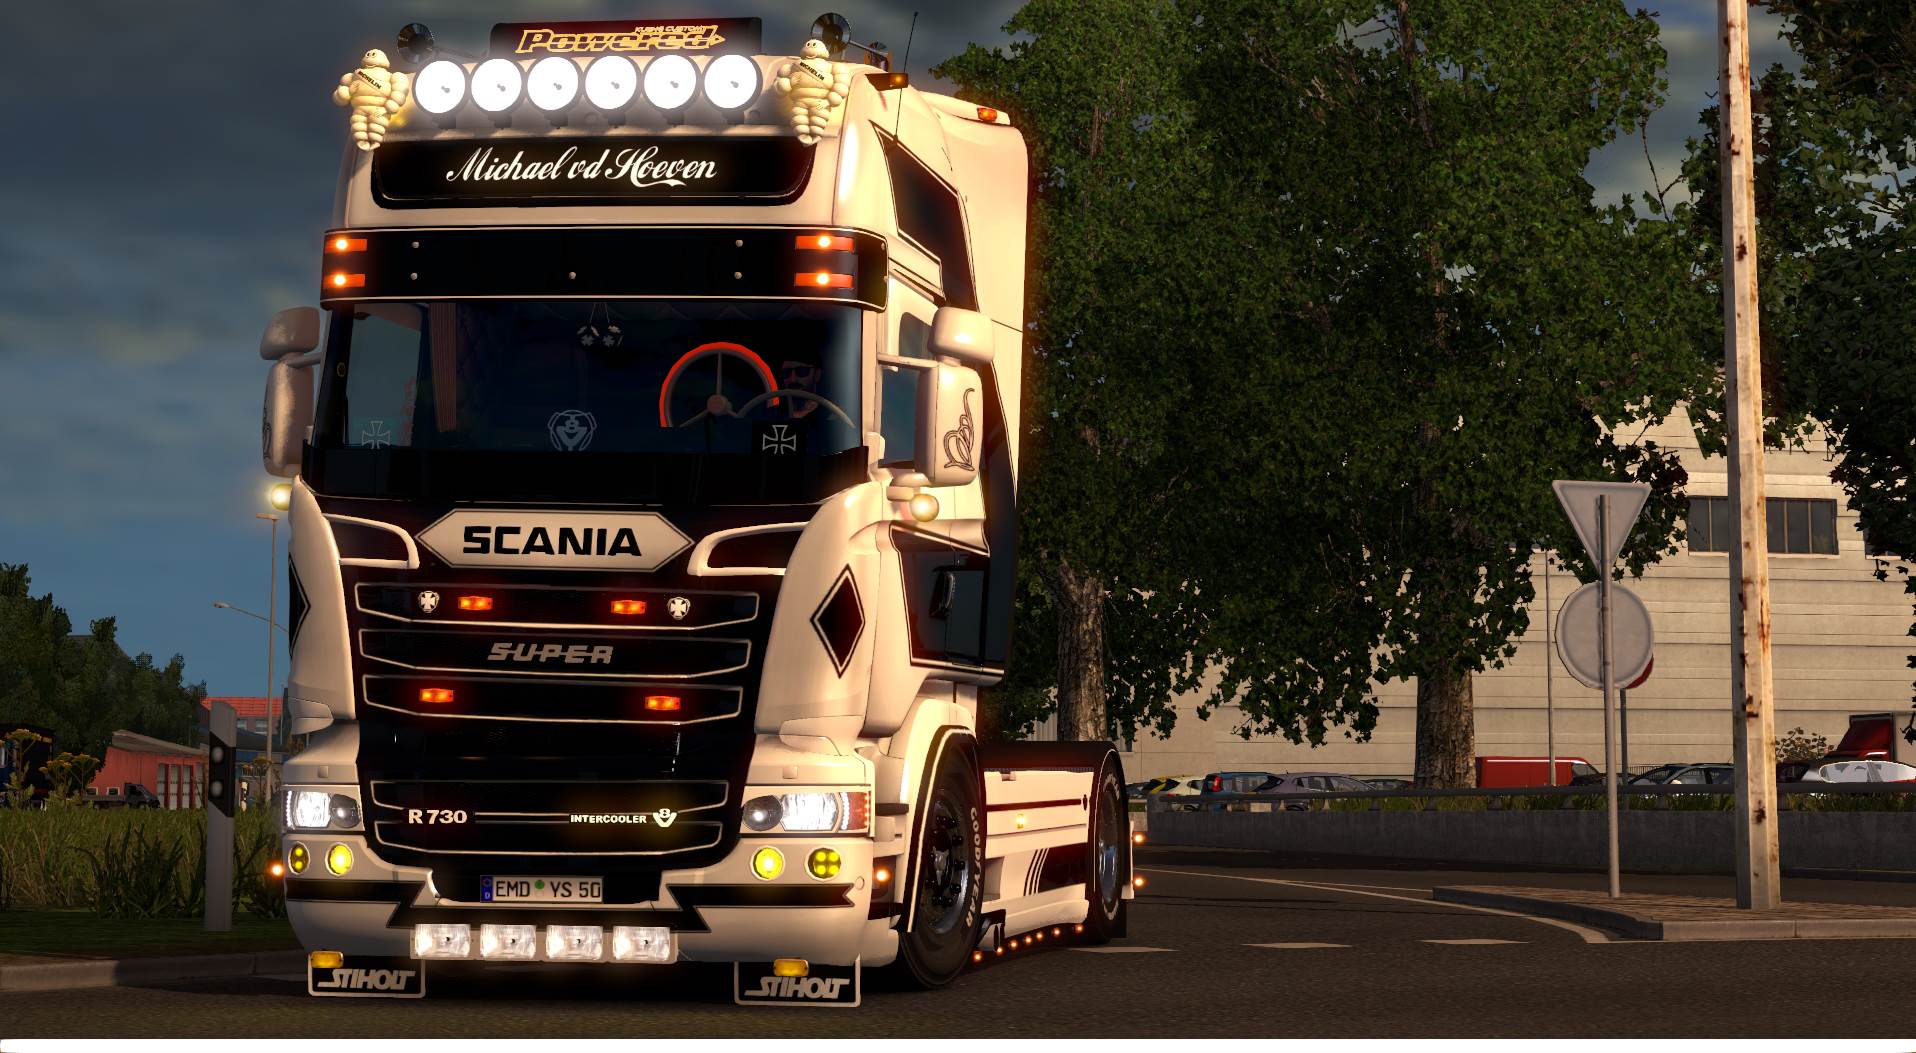 euro truck simulator 2 mods truck